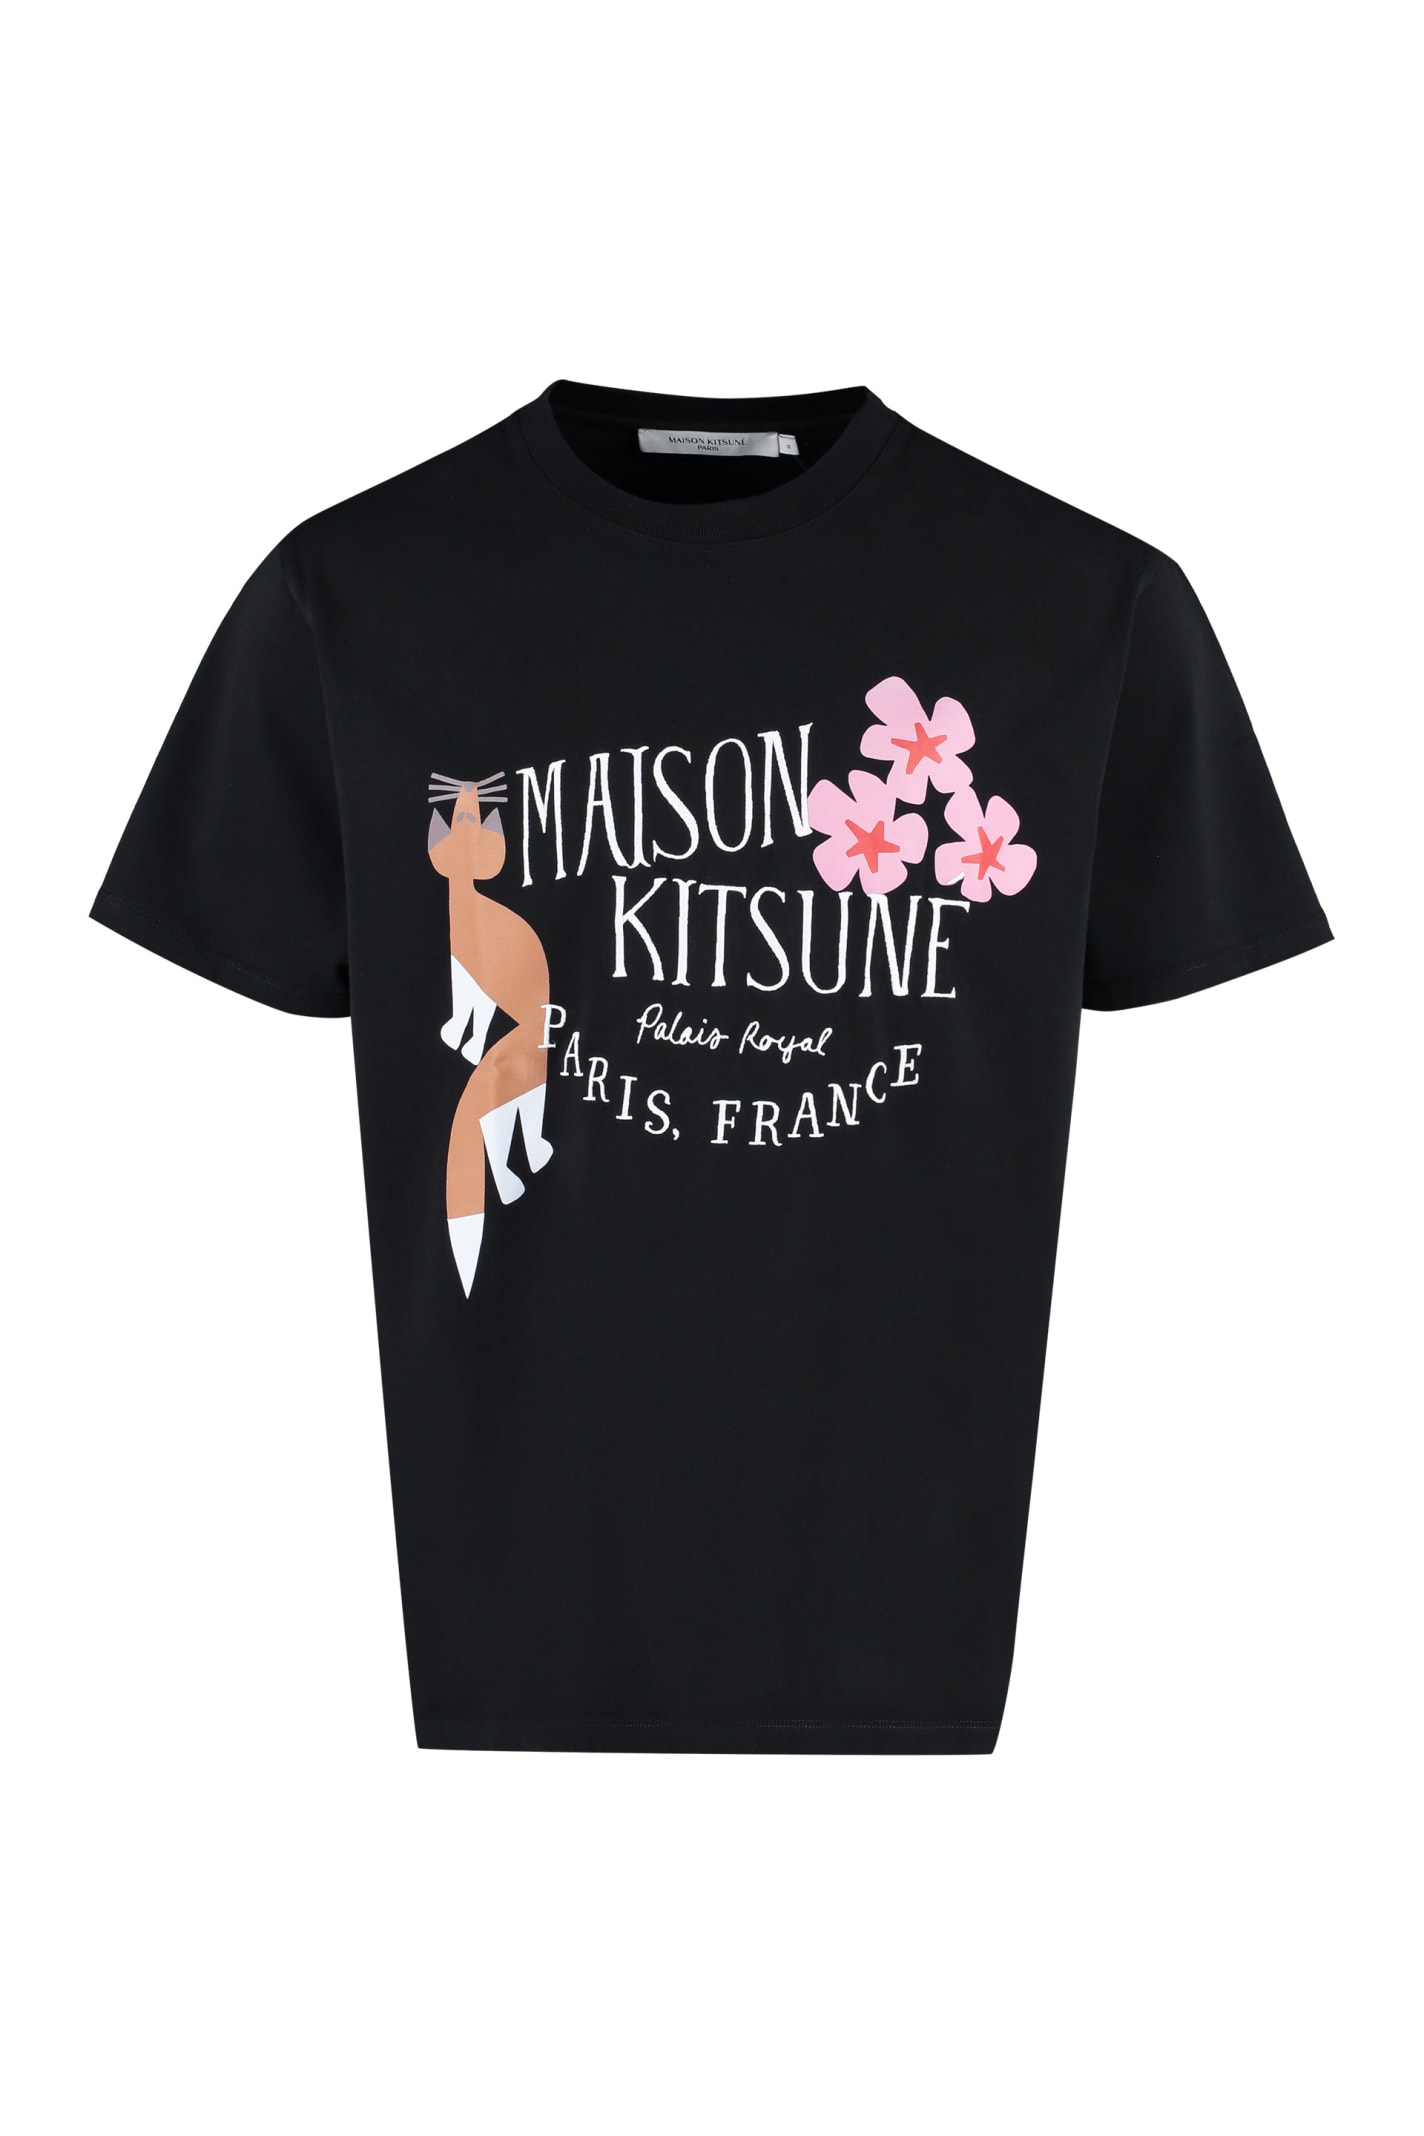 Maison Kitsuné X Bill Rebholz - Printed Cotton T-shirt